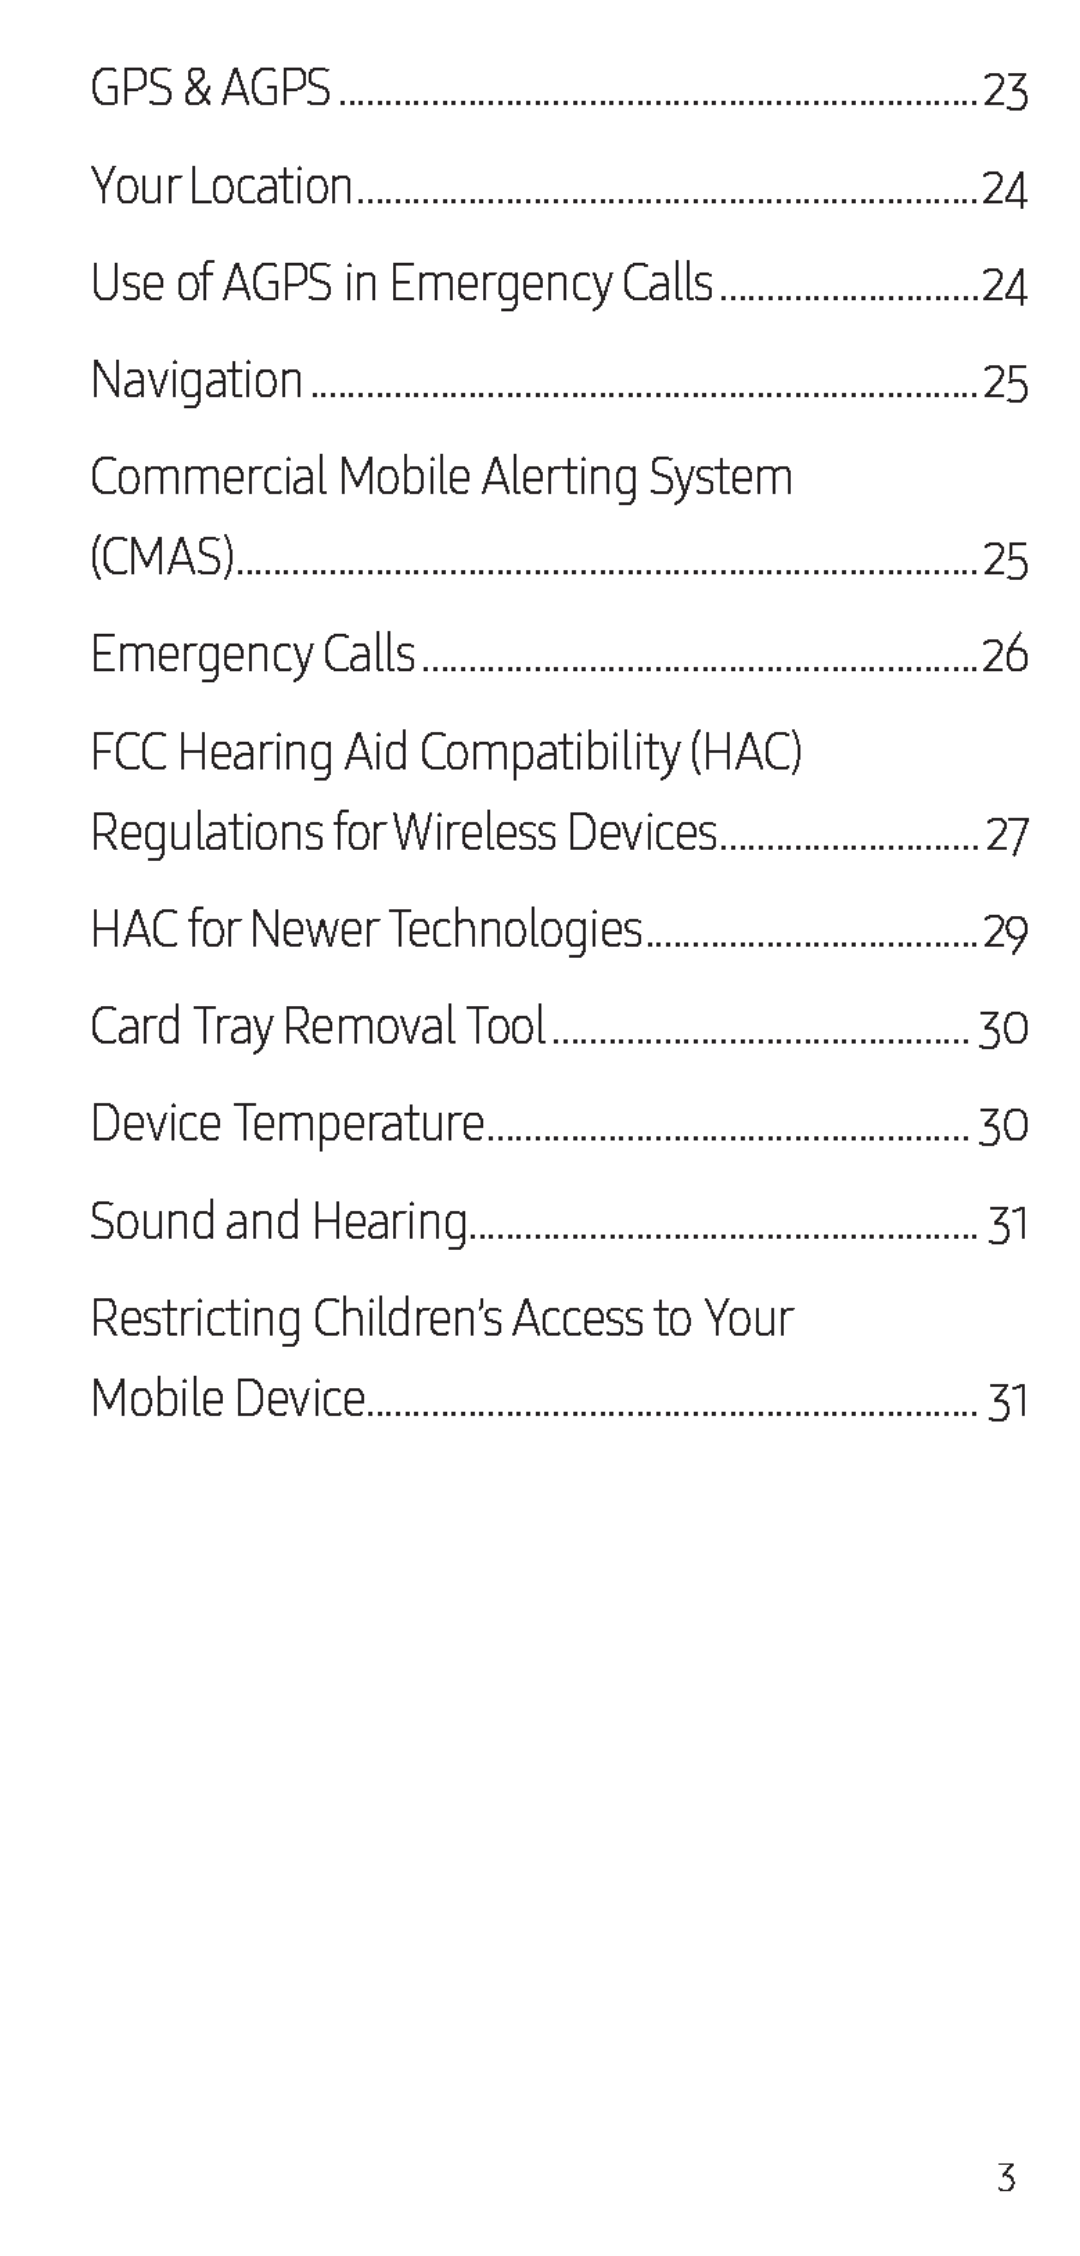 FCC Hearing Aid Compatibility (HAC) Galaxy S7 Unlocked